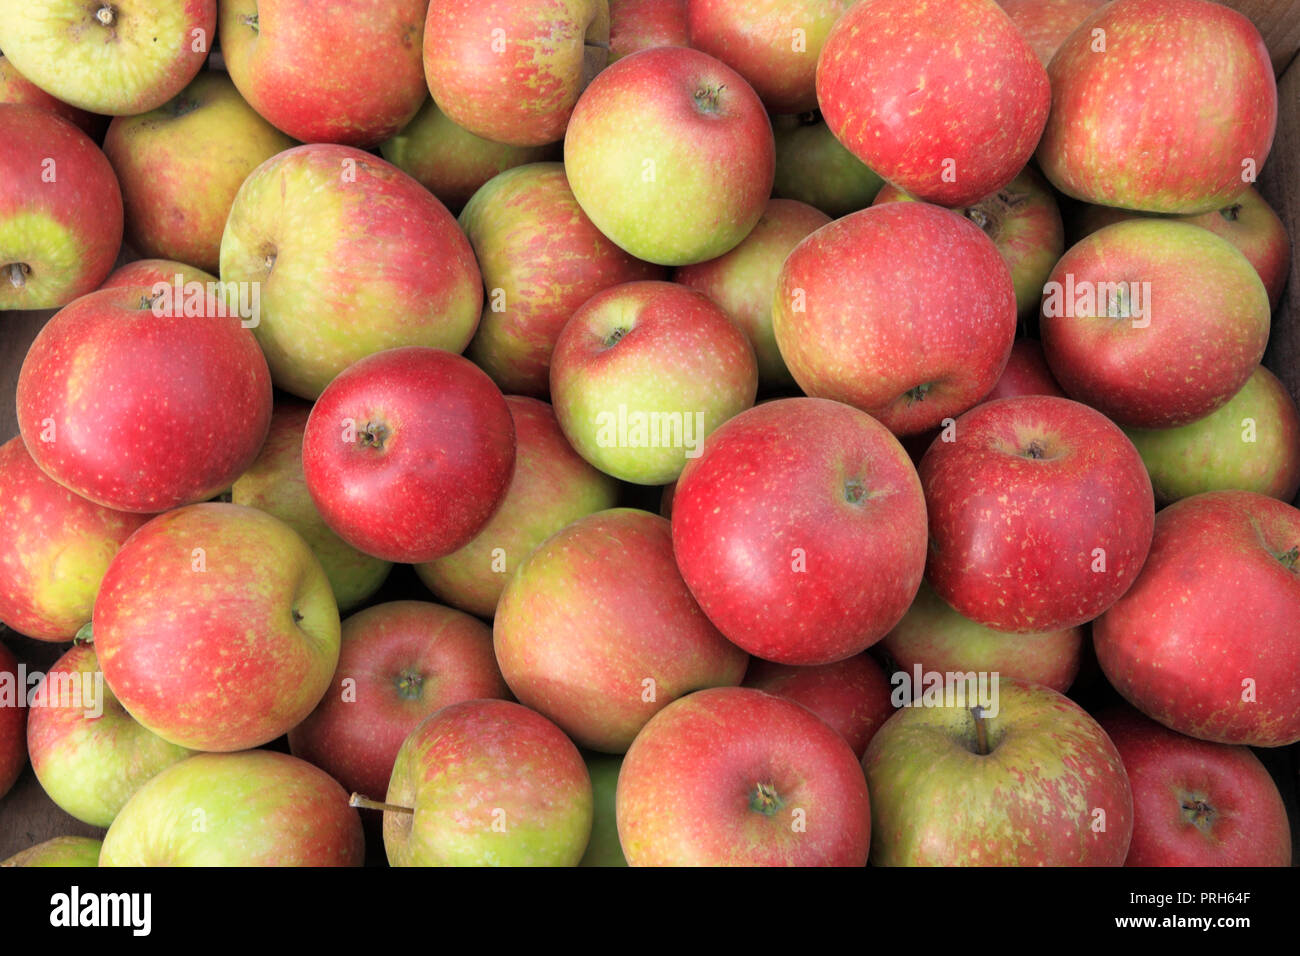 Apple 'Clopton Red', apples, malus domestica, farm shop, display, edible, fruit Stock Photo